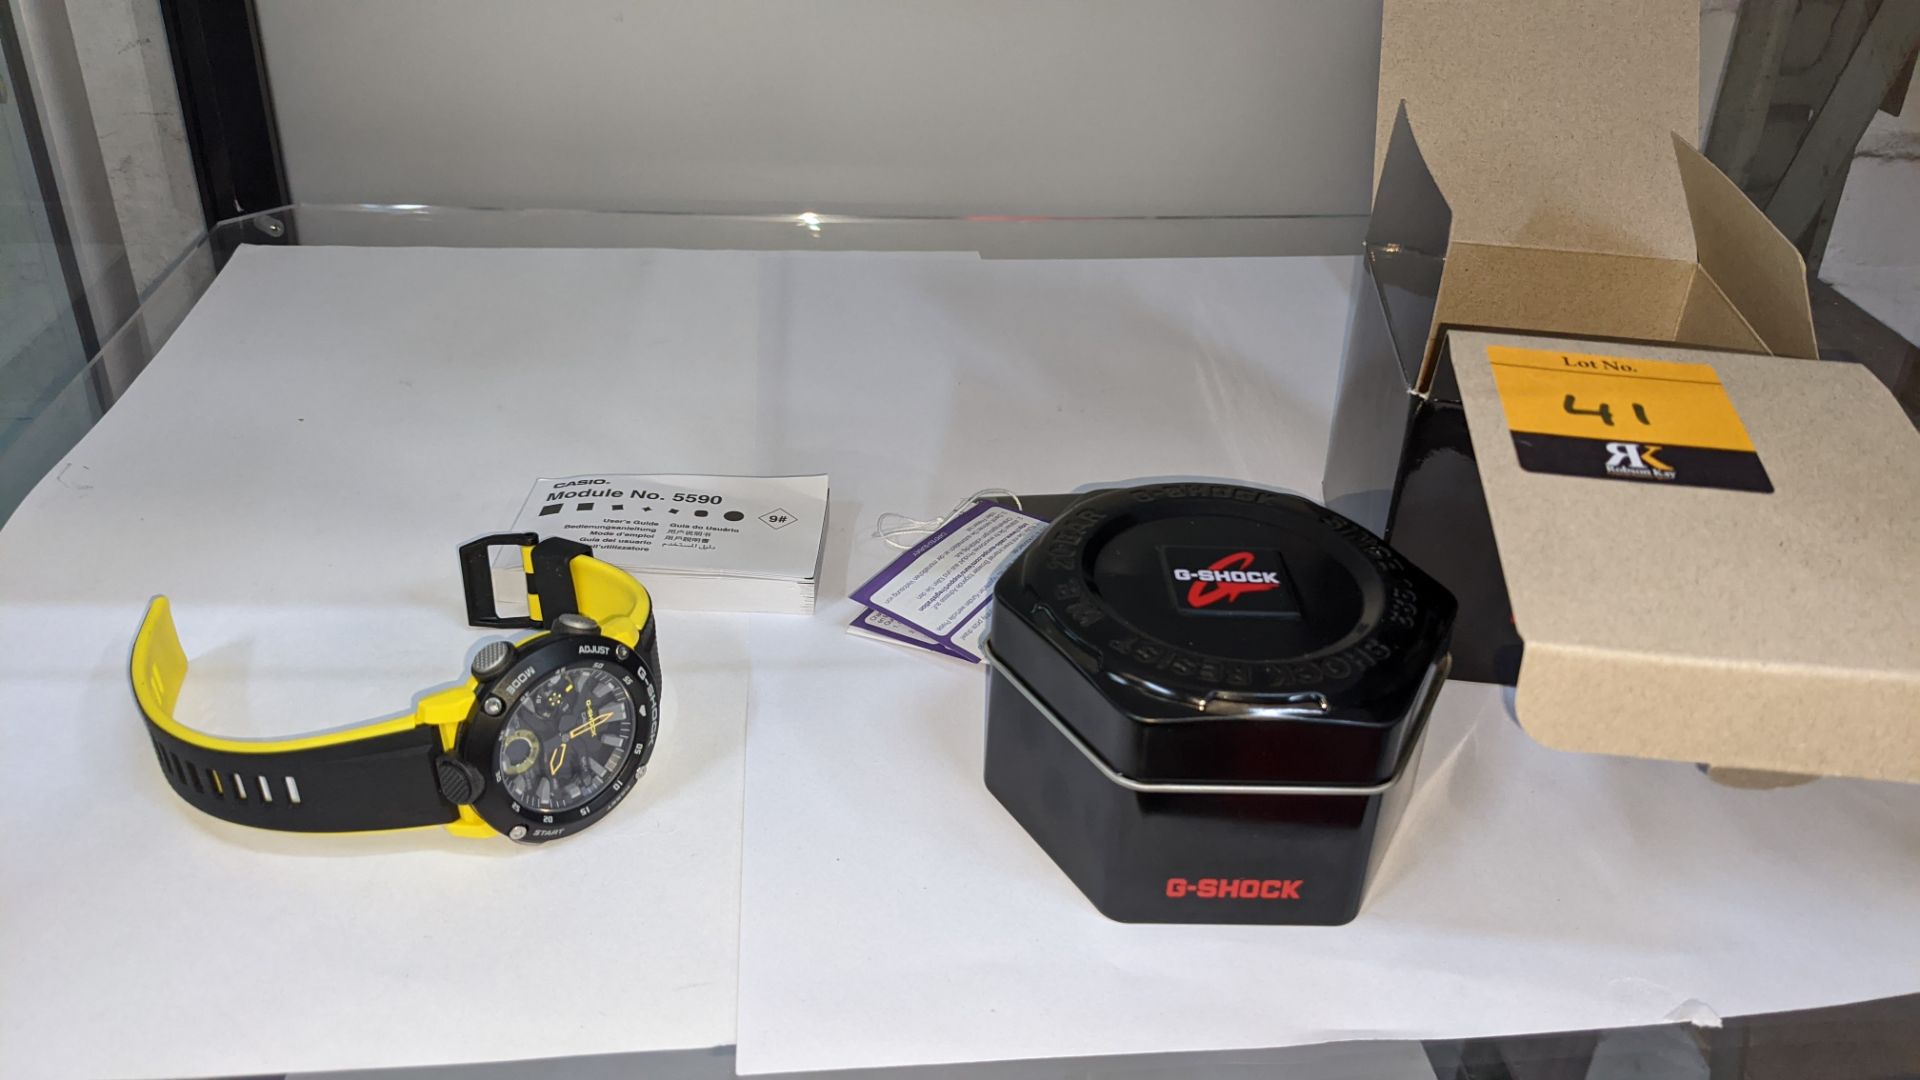 Casio G-Shock combination analogue/digital watch model 5590, GA-2000 - Image 9 of 10